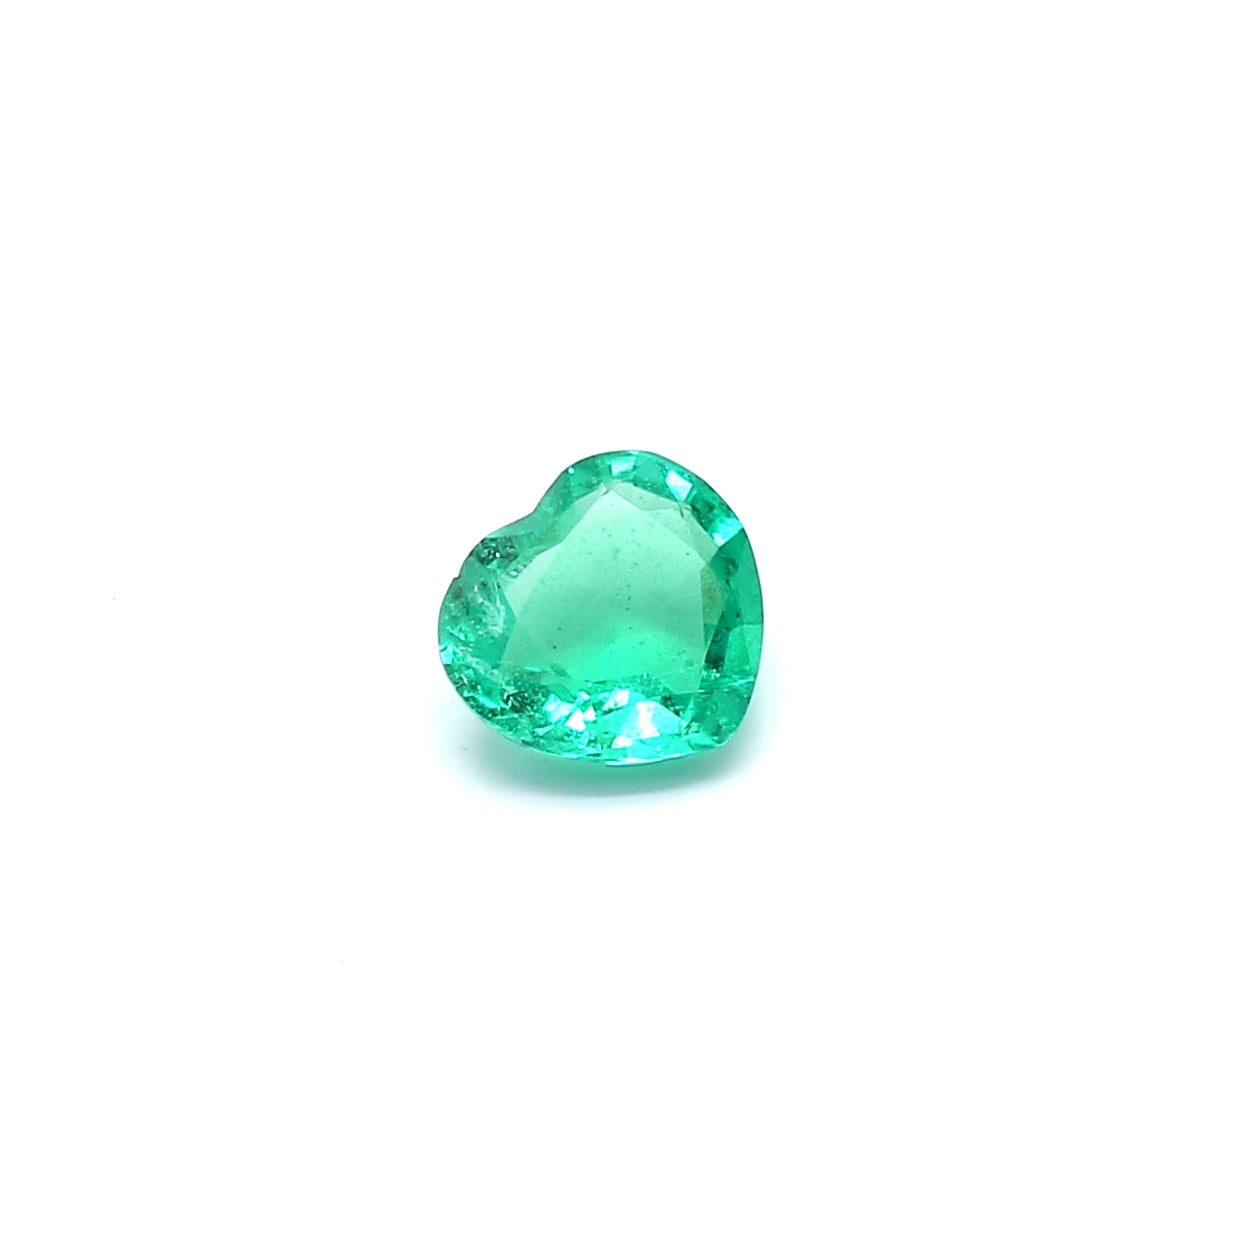 0.50ct Heart Shape Emerald, Minor Oil, Zambia - 5.49 x 5.94 x 2.68mm